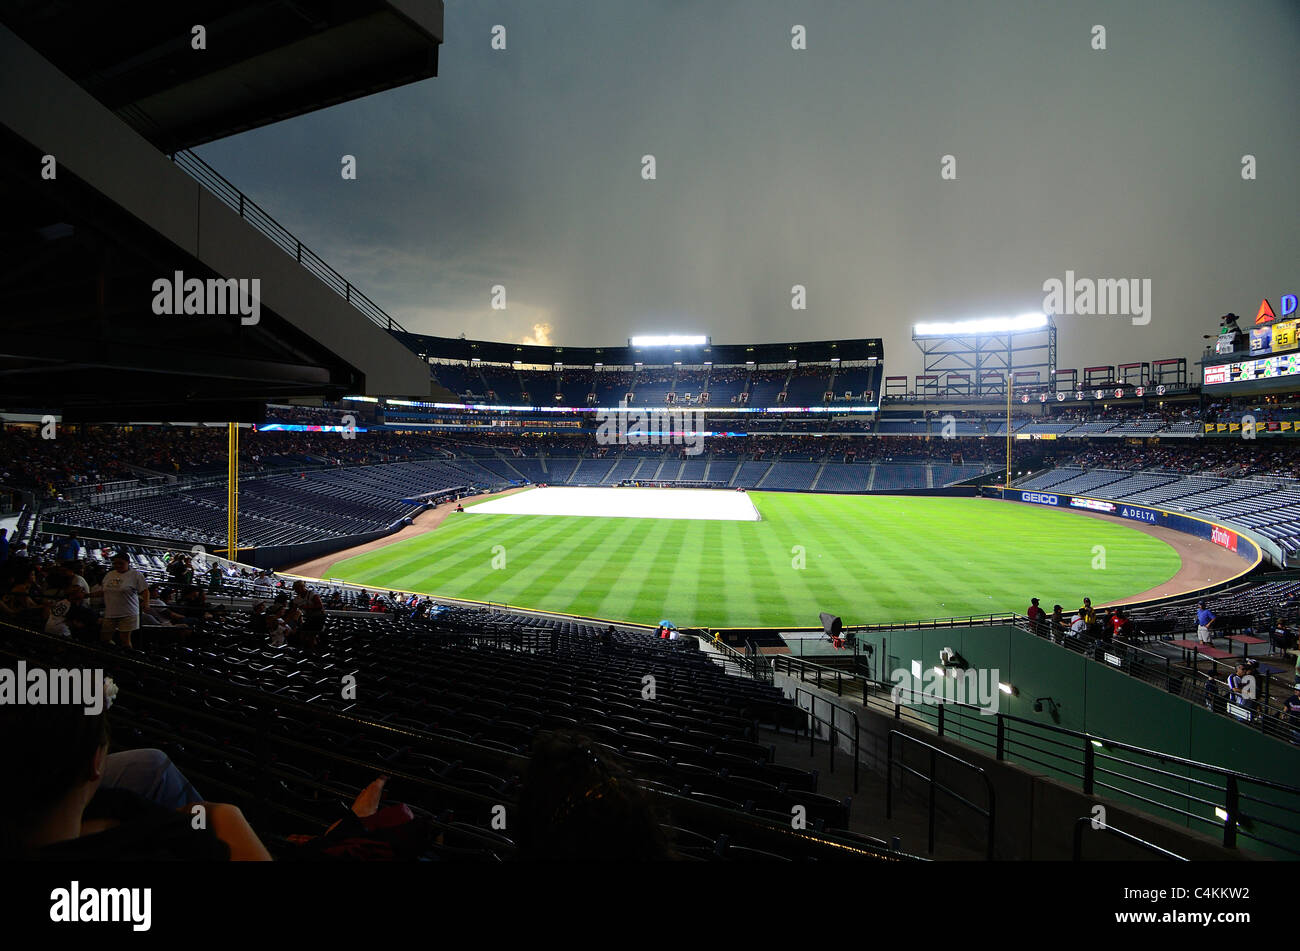 Baseball rain delay hi-res stock photography and images - Alamy